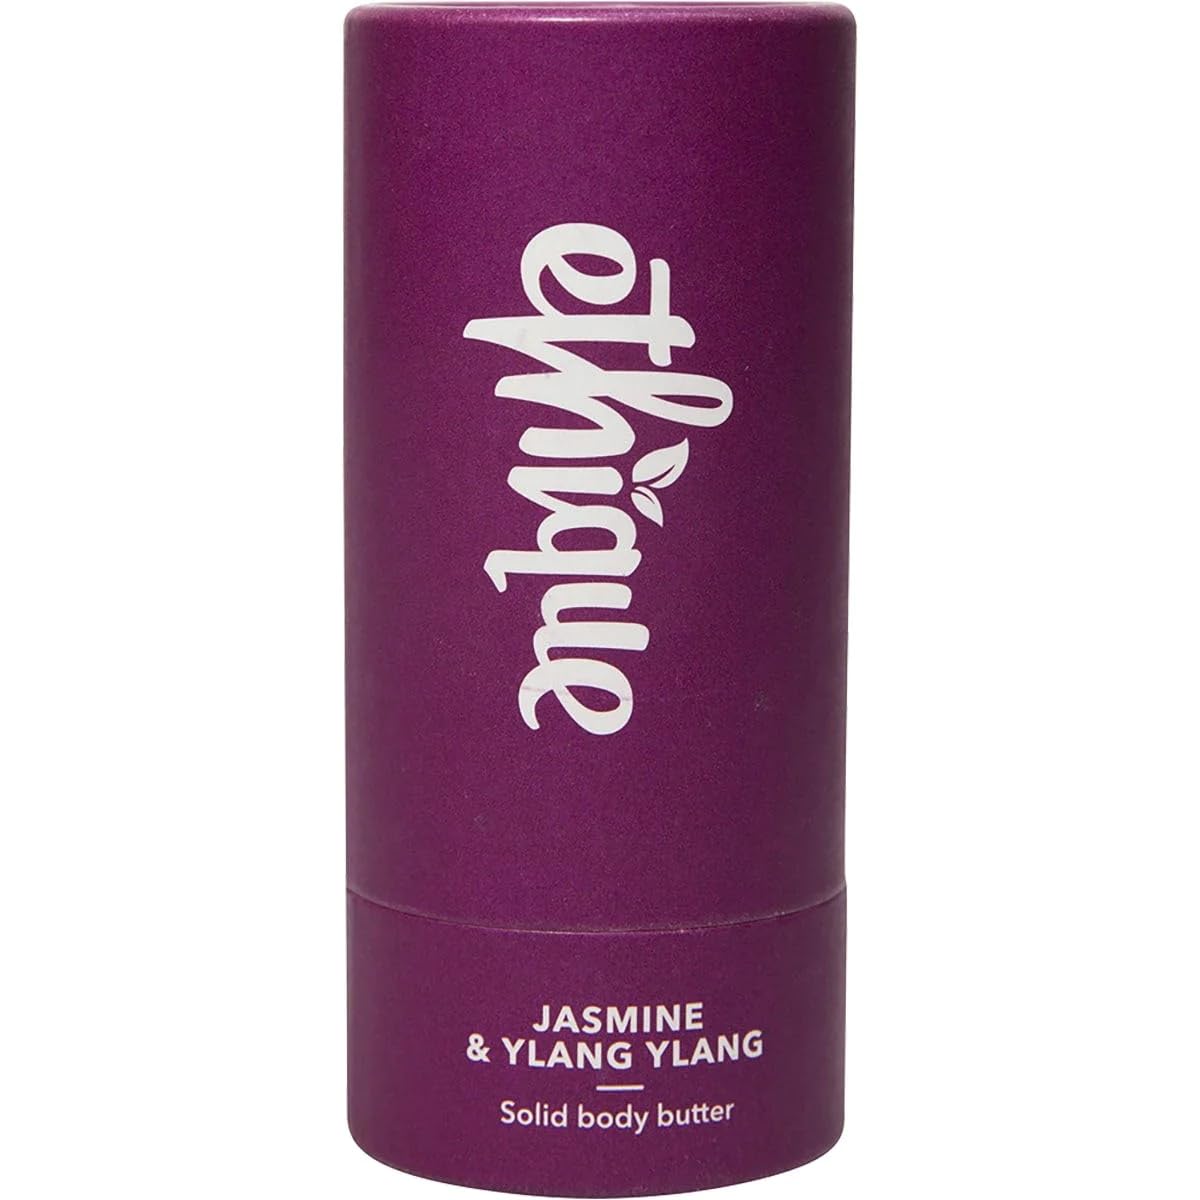 Ethique Nourishing Jasmine & Ylang Ylang Butter Block - Moisturizing Tube - Plastic-Free, Vegan, Cruelty-Free, Eco-Friendly, 3.53 oz (Pack of 1) : Beauty & Personal Care